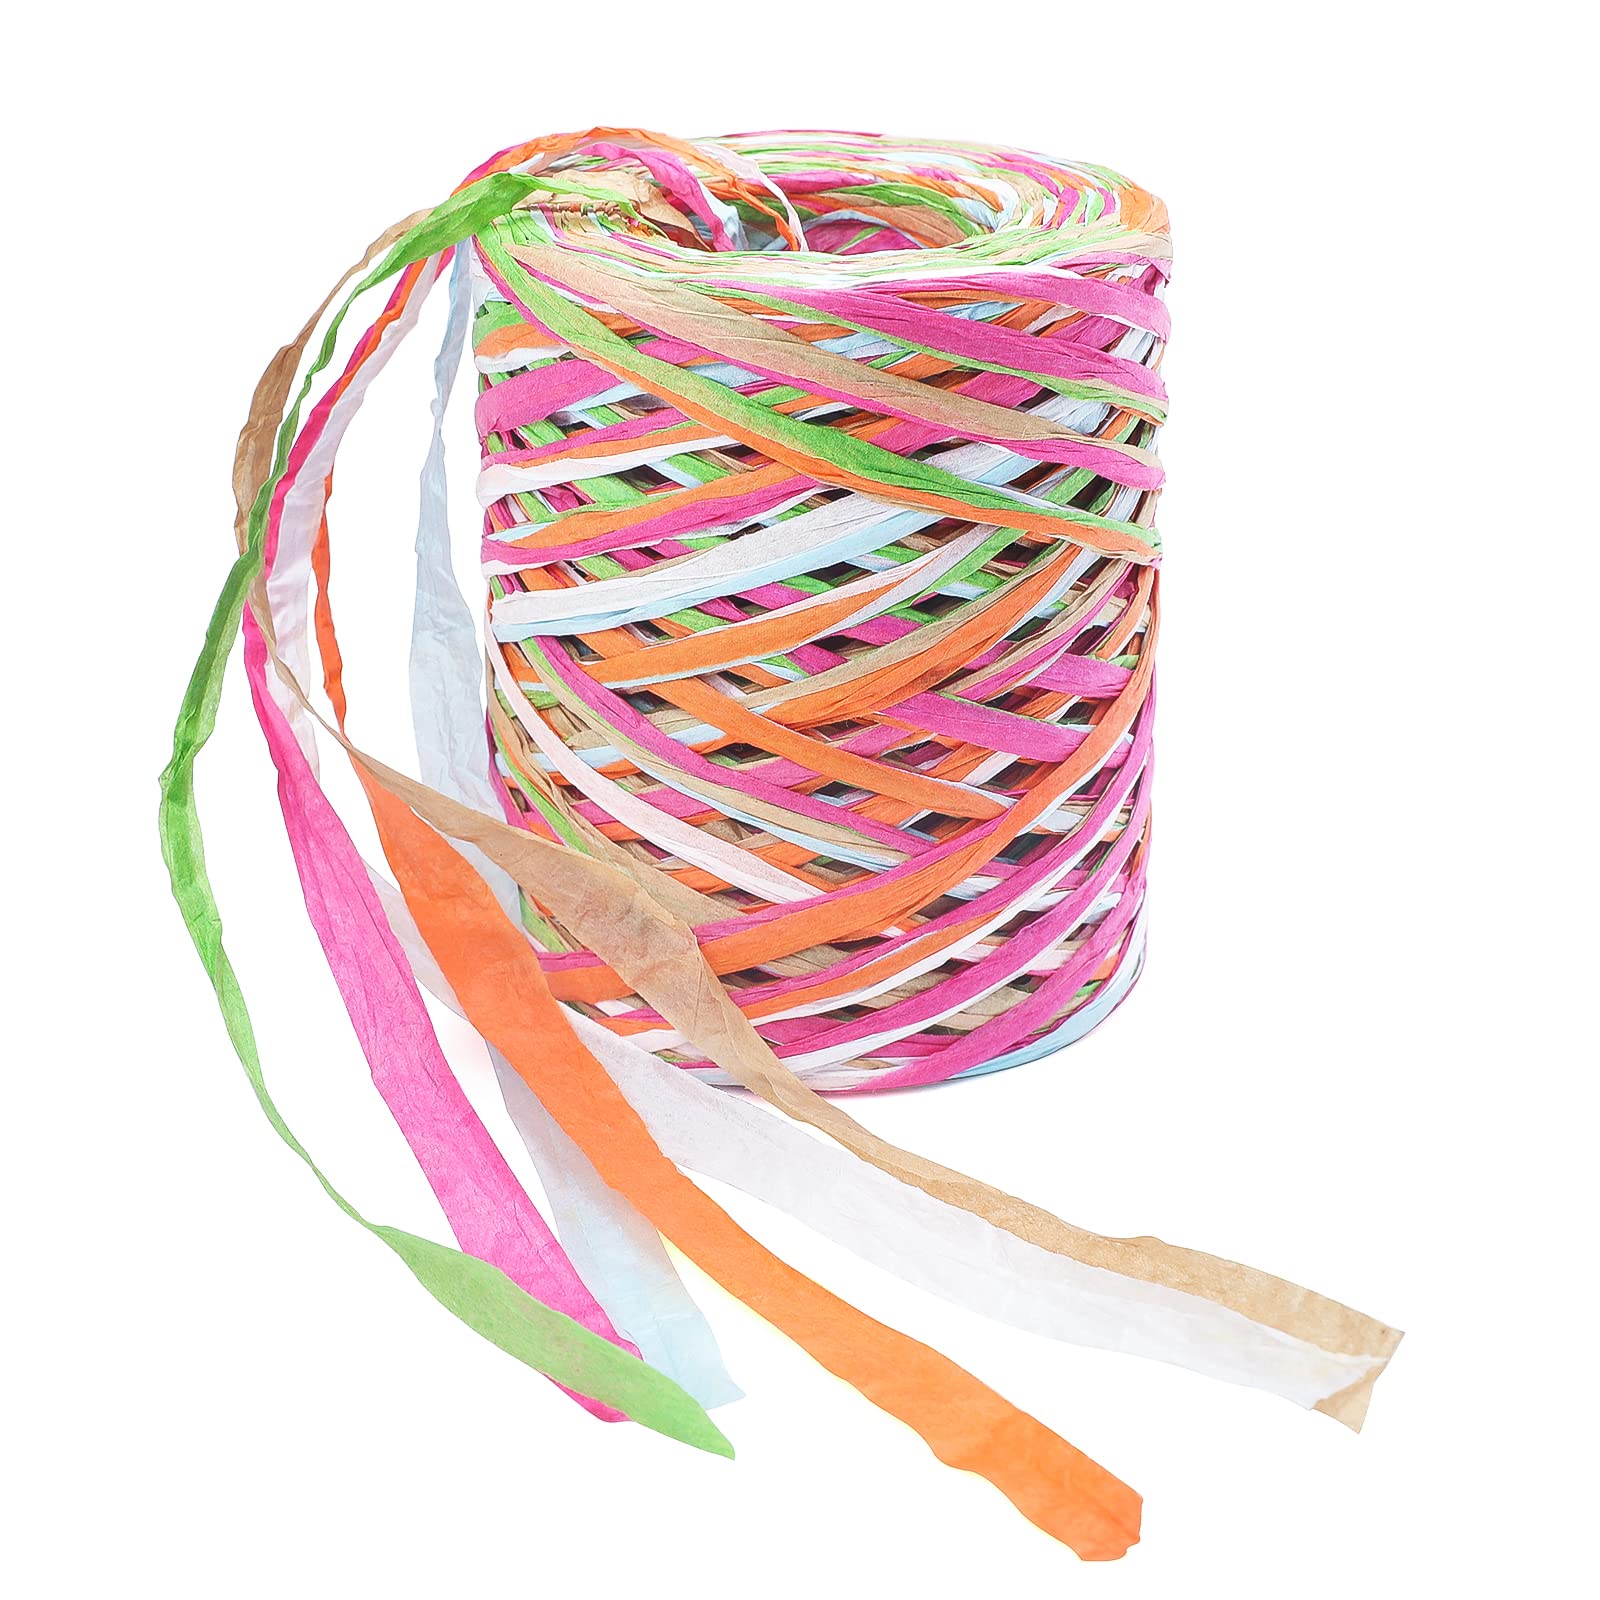 jijAcraft Raffia String, 656 Feet 2mm Twisted Raffia Ribbon for Craft Gift  Wrapping, Natural Ribbon Paper Twine String for Gift Wrapping, Crafting